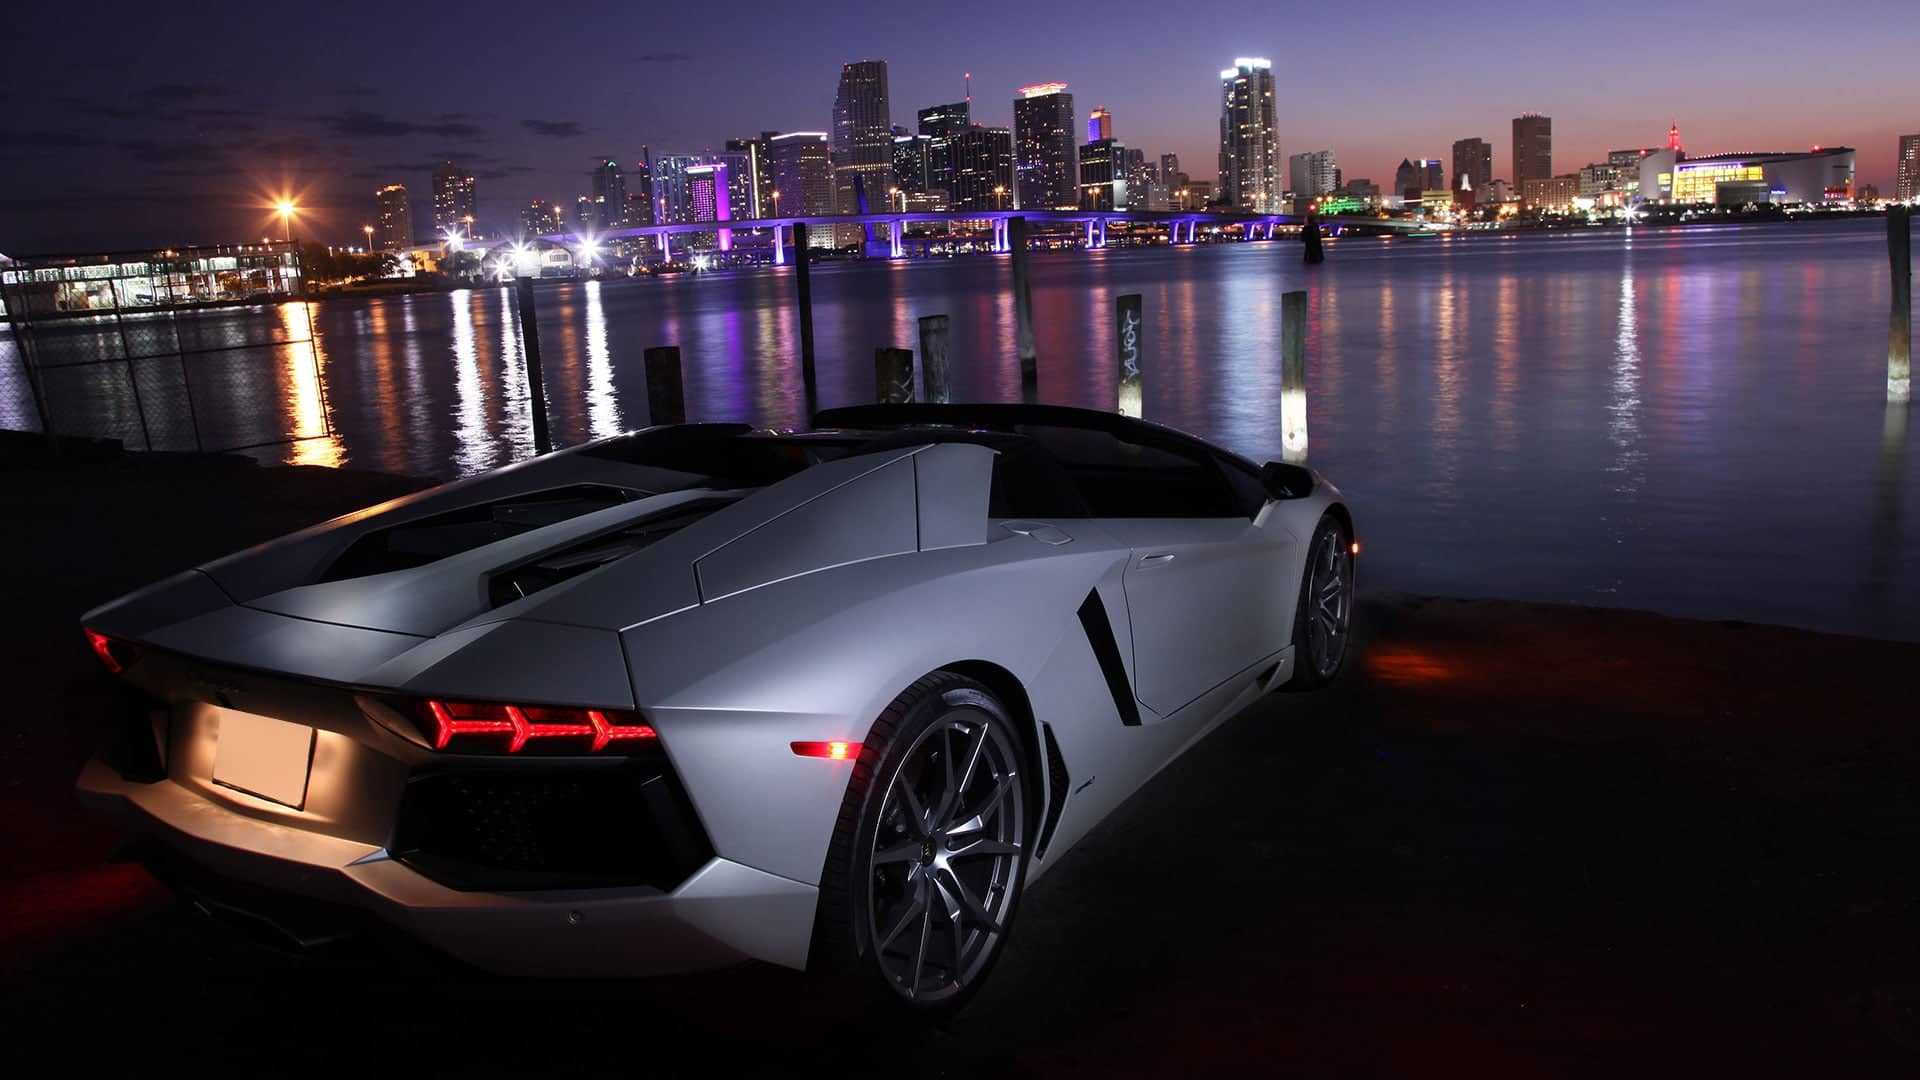 Lamborghini Aventador Roadster - Pictures, Videos